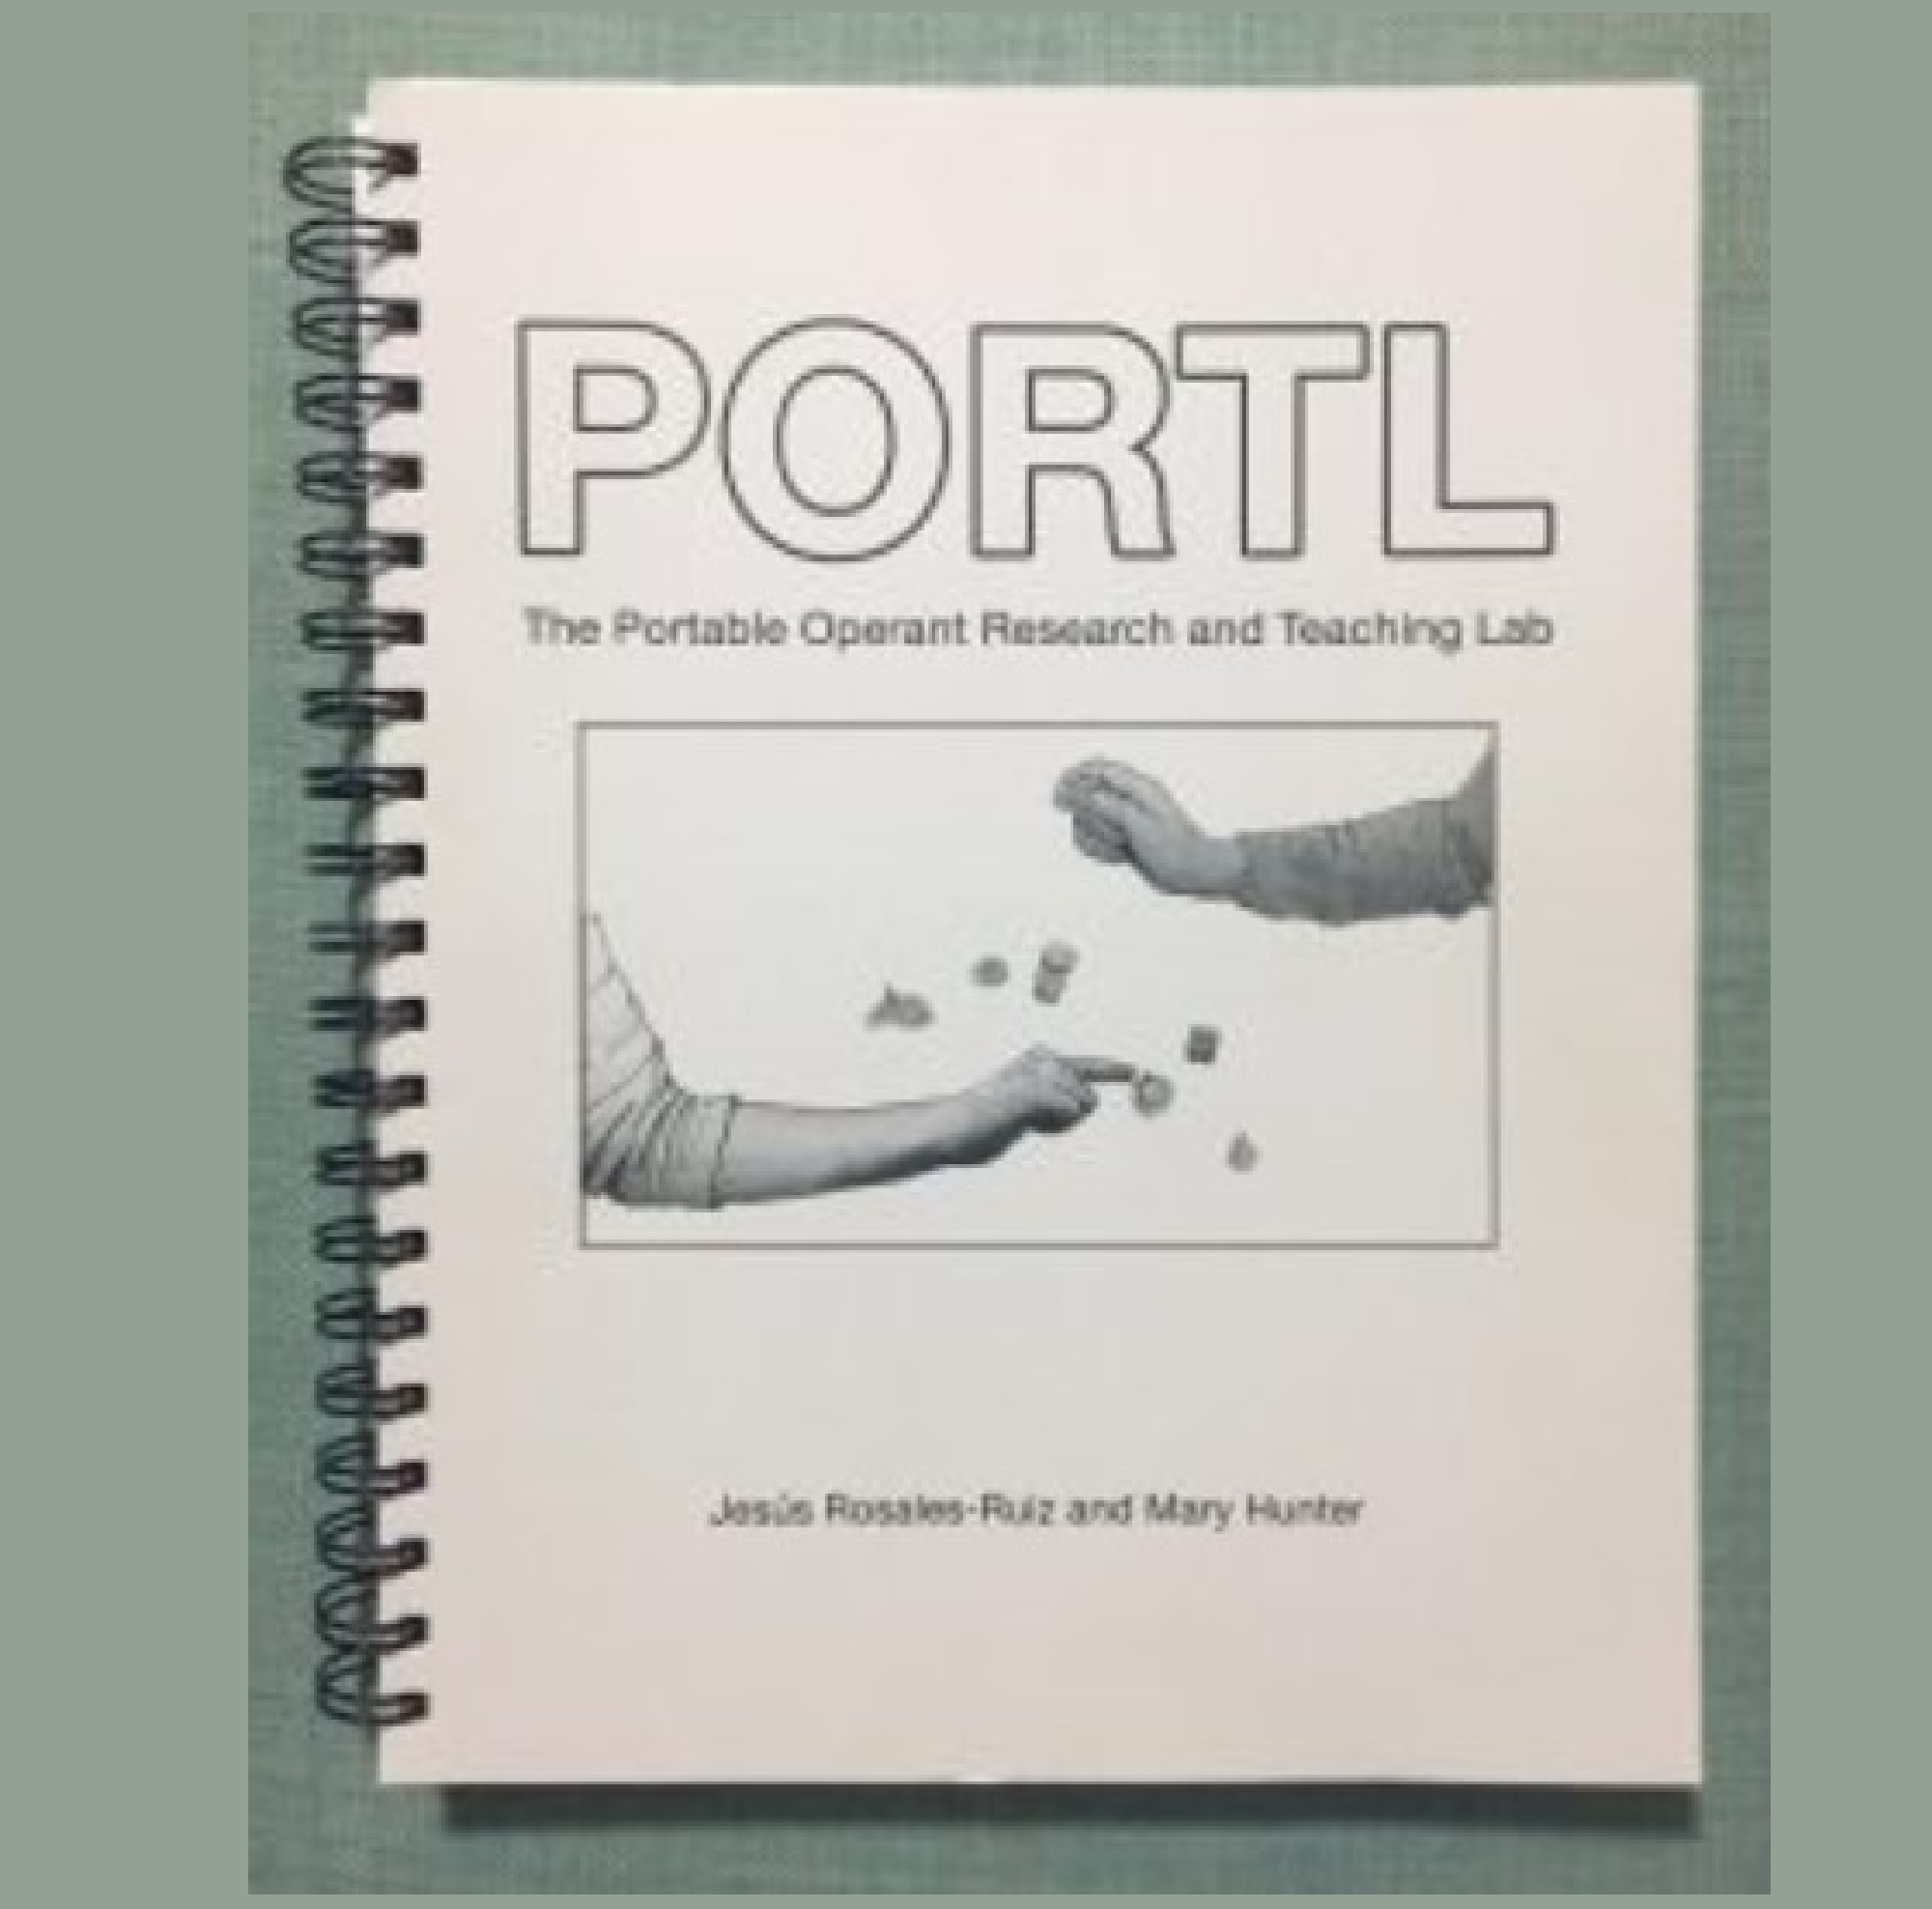 PORTL manual